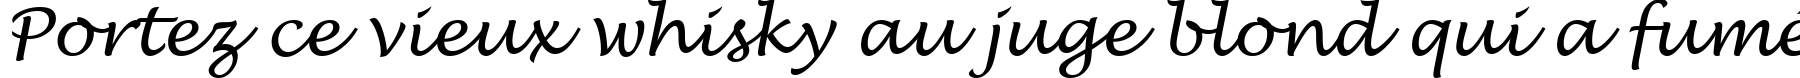 Пример написания шрифтом Lucida Handwriting Italic текста на французском